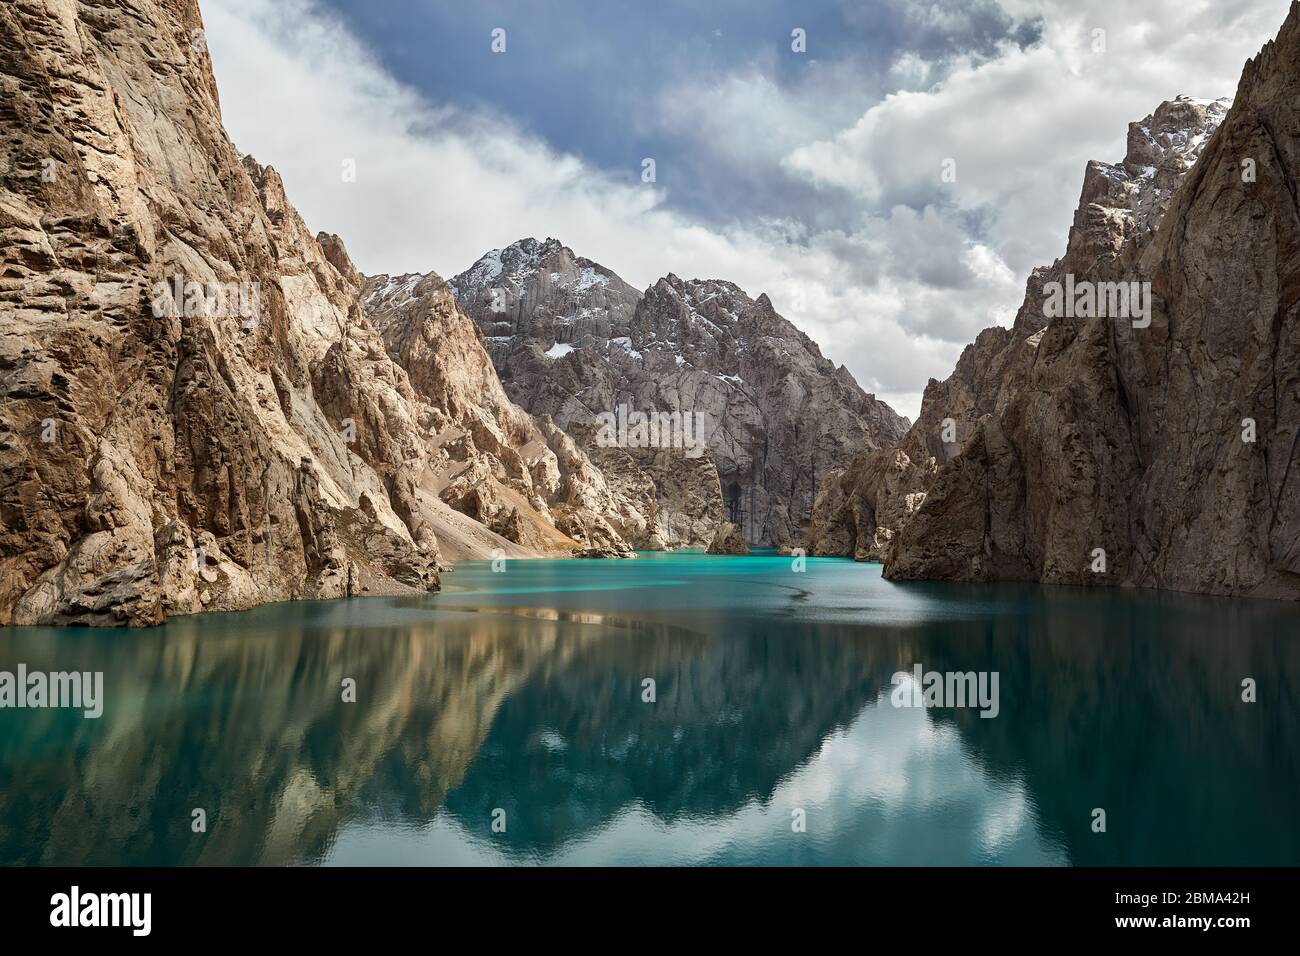 Schöne Landschaft des berühmten Berg See Kel Suu. In der Nähe der chinesischen Grenze in Kirgisistan entfernt Stockfoto